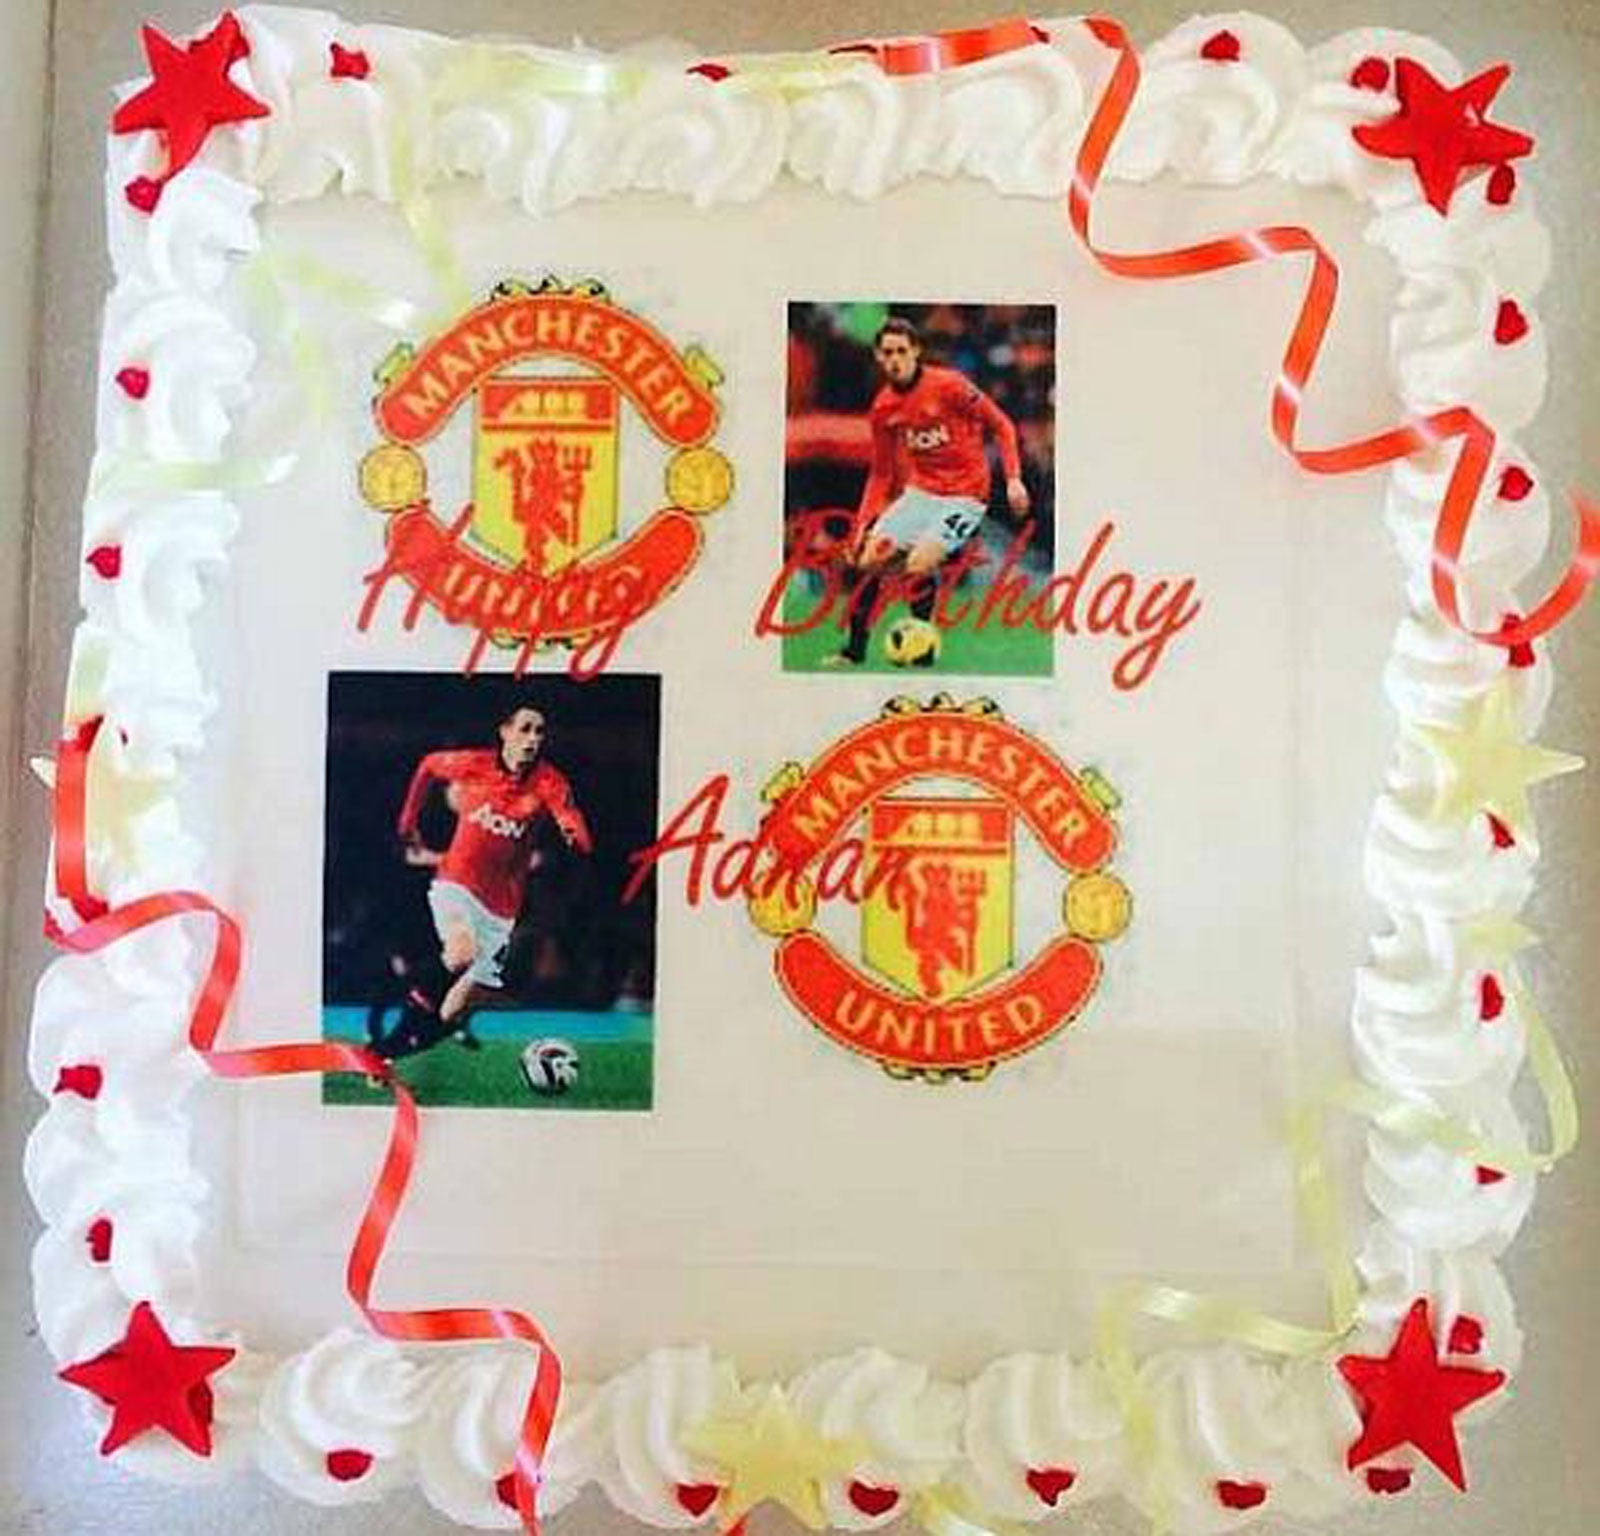 Adnan Januzaj celebrated his 19th birthday with this Manchester United-style birthday cake